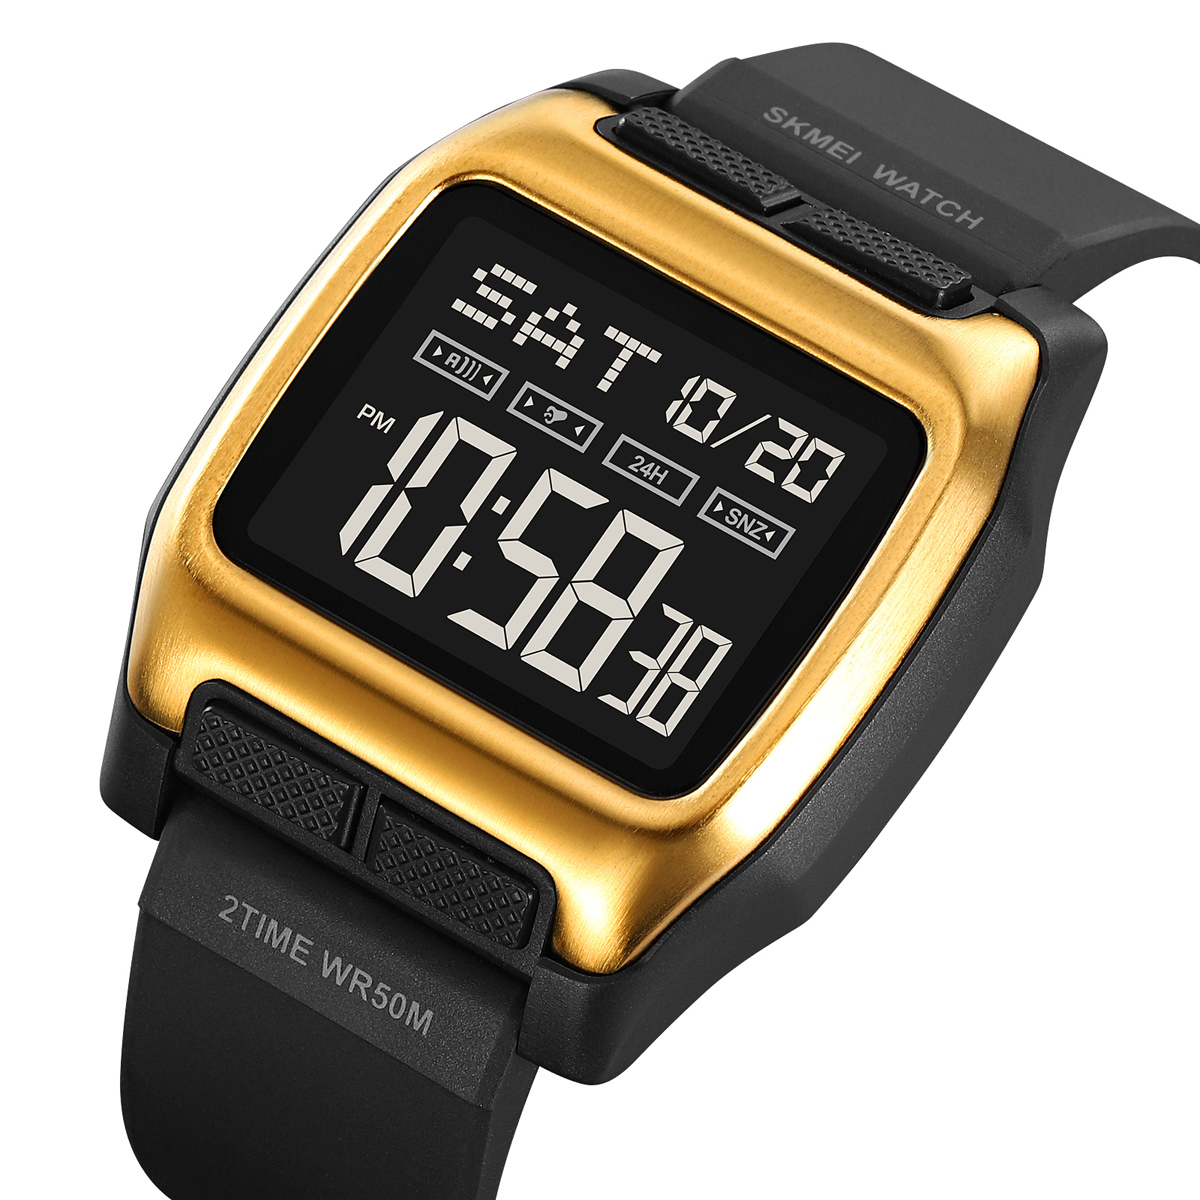 SKMEI 2193 NEW DESIGN Electronic watch